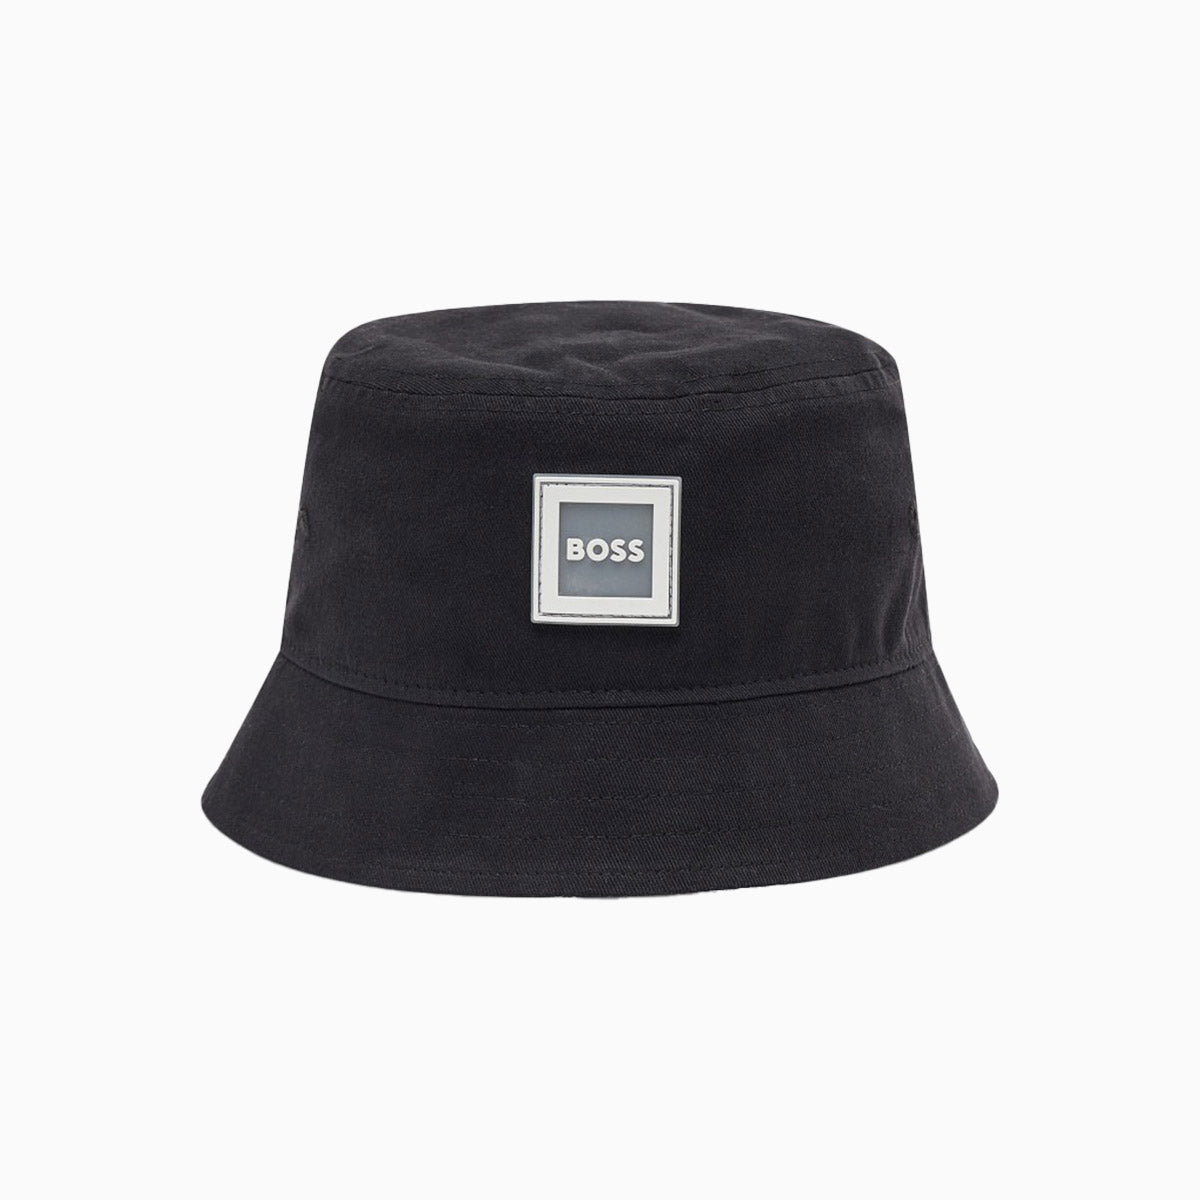 Hugo Boss Kid's Bucket Hat - Color: Black - Kids Premium Clothing -